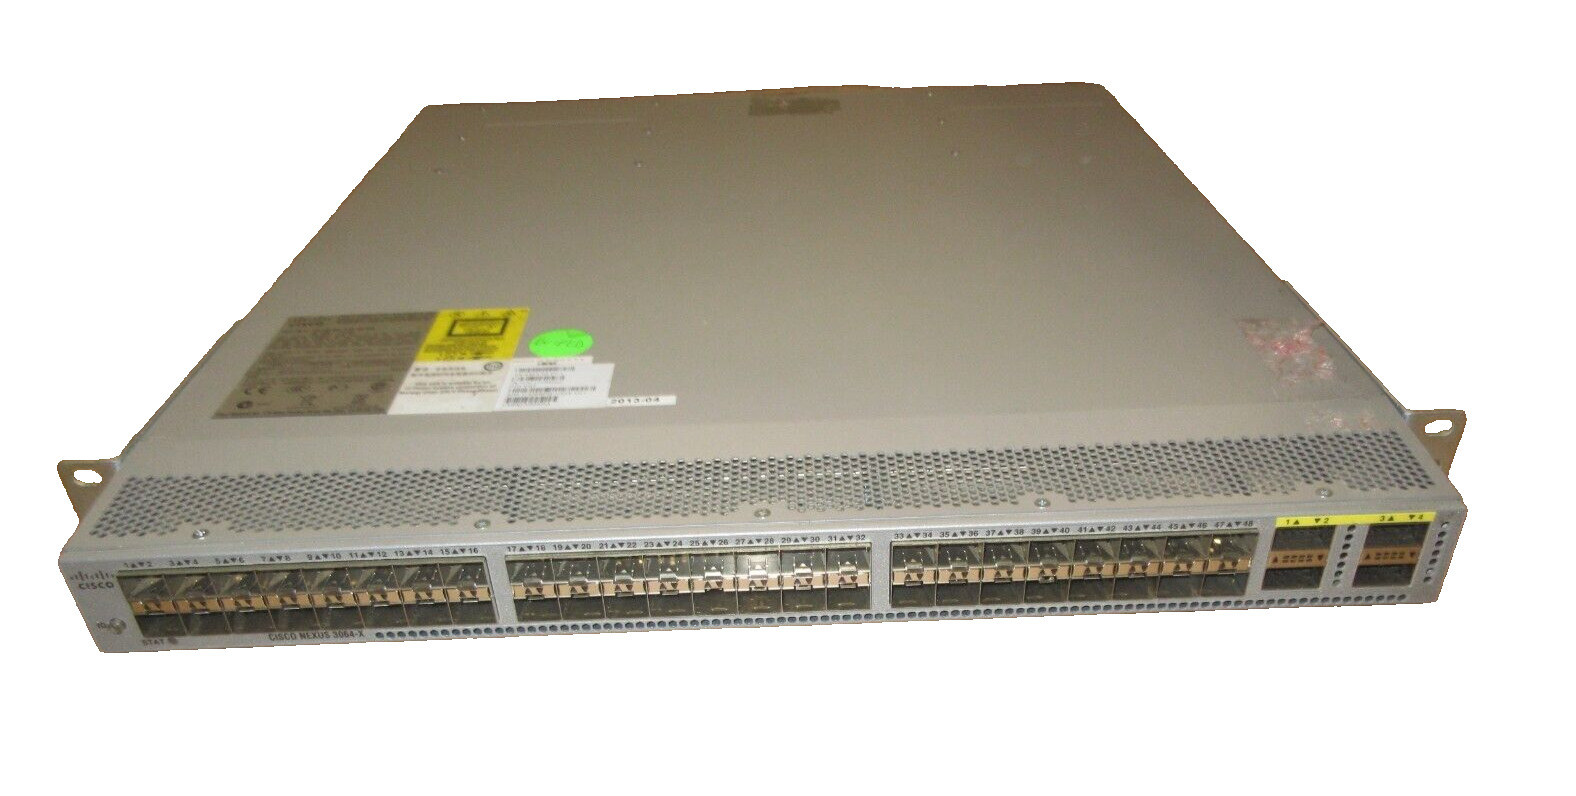 Cisco N3K-C3064PQ-10GX (BAD PORT RETENTION ON SOME PORTS)